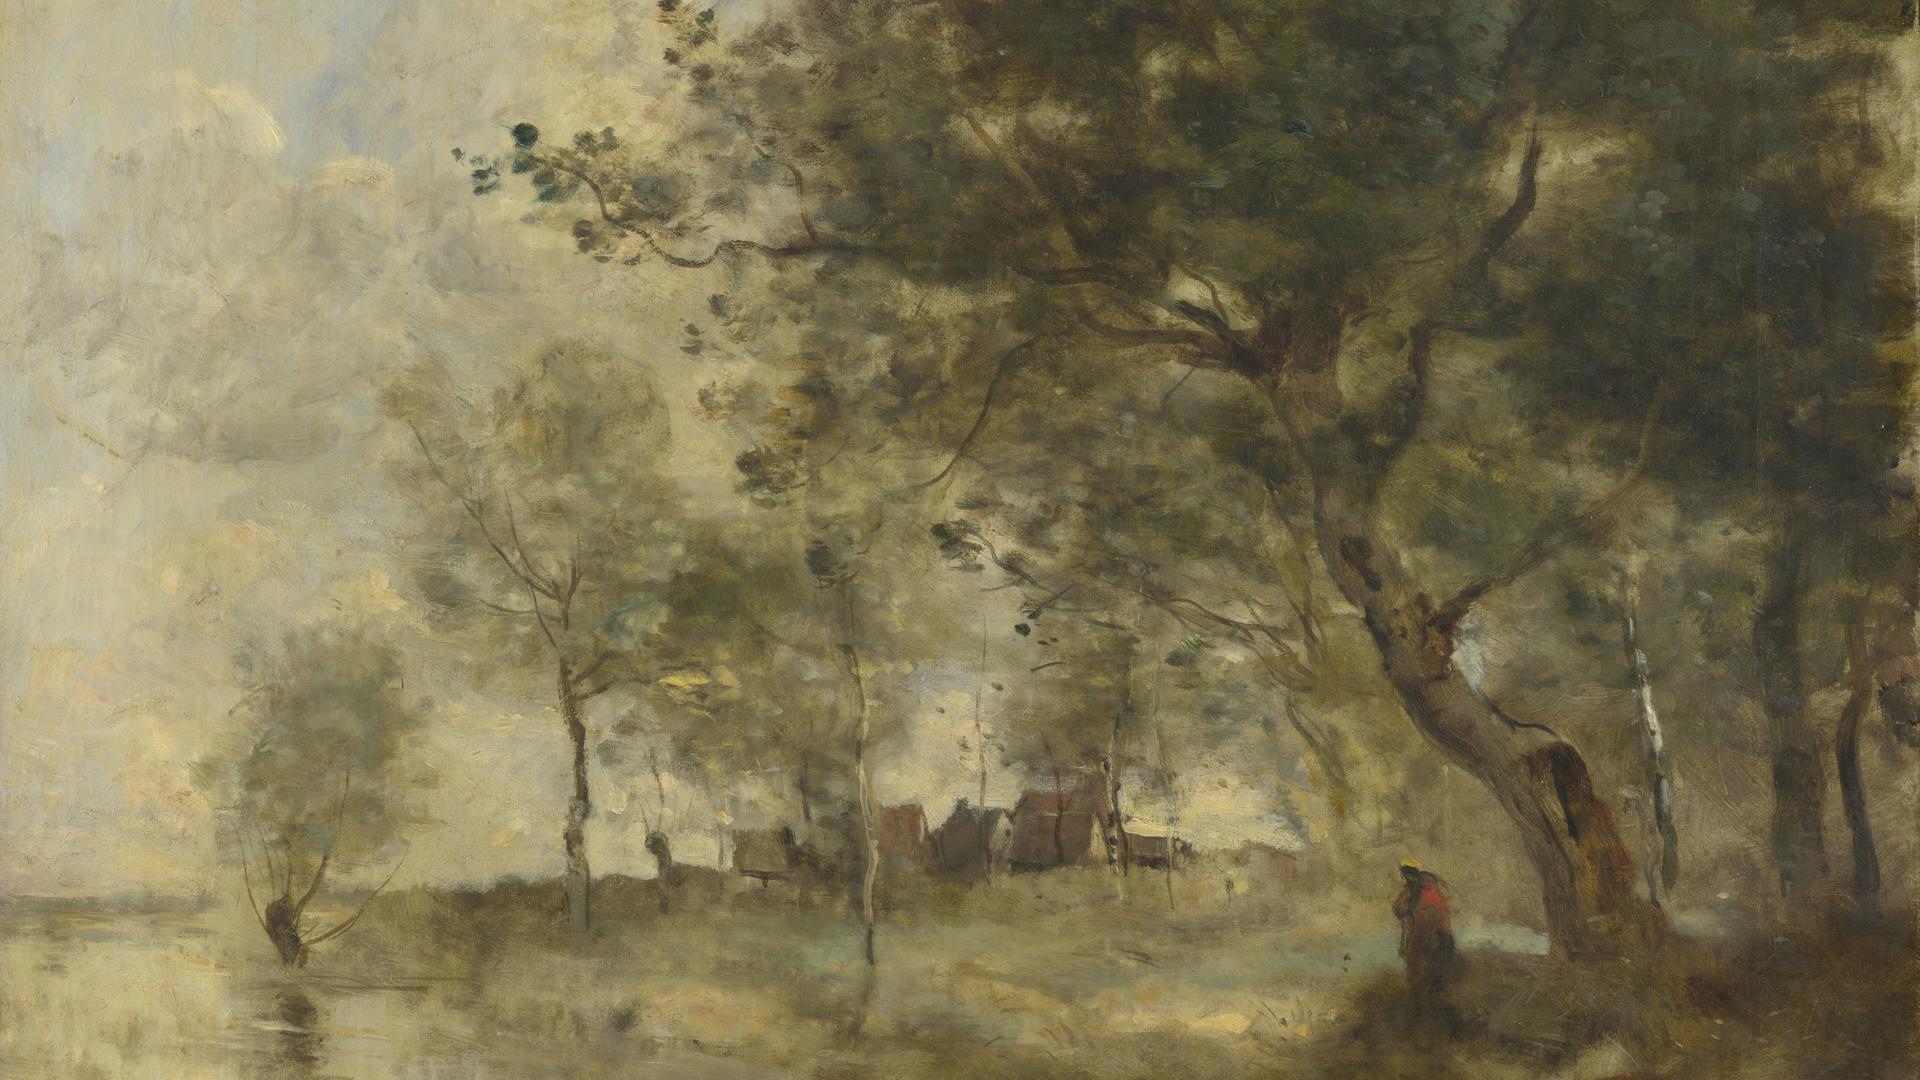 A Flood by Jean-Baptiste-Camille Corot